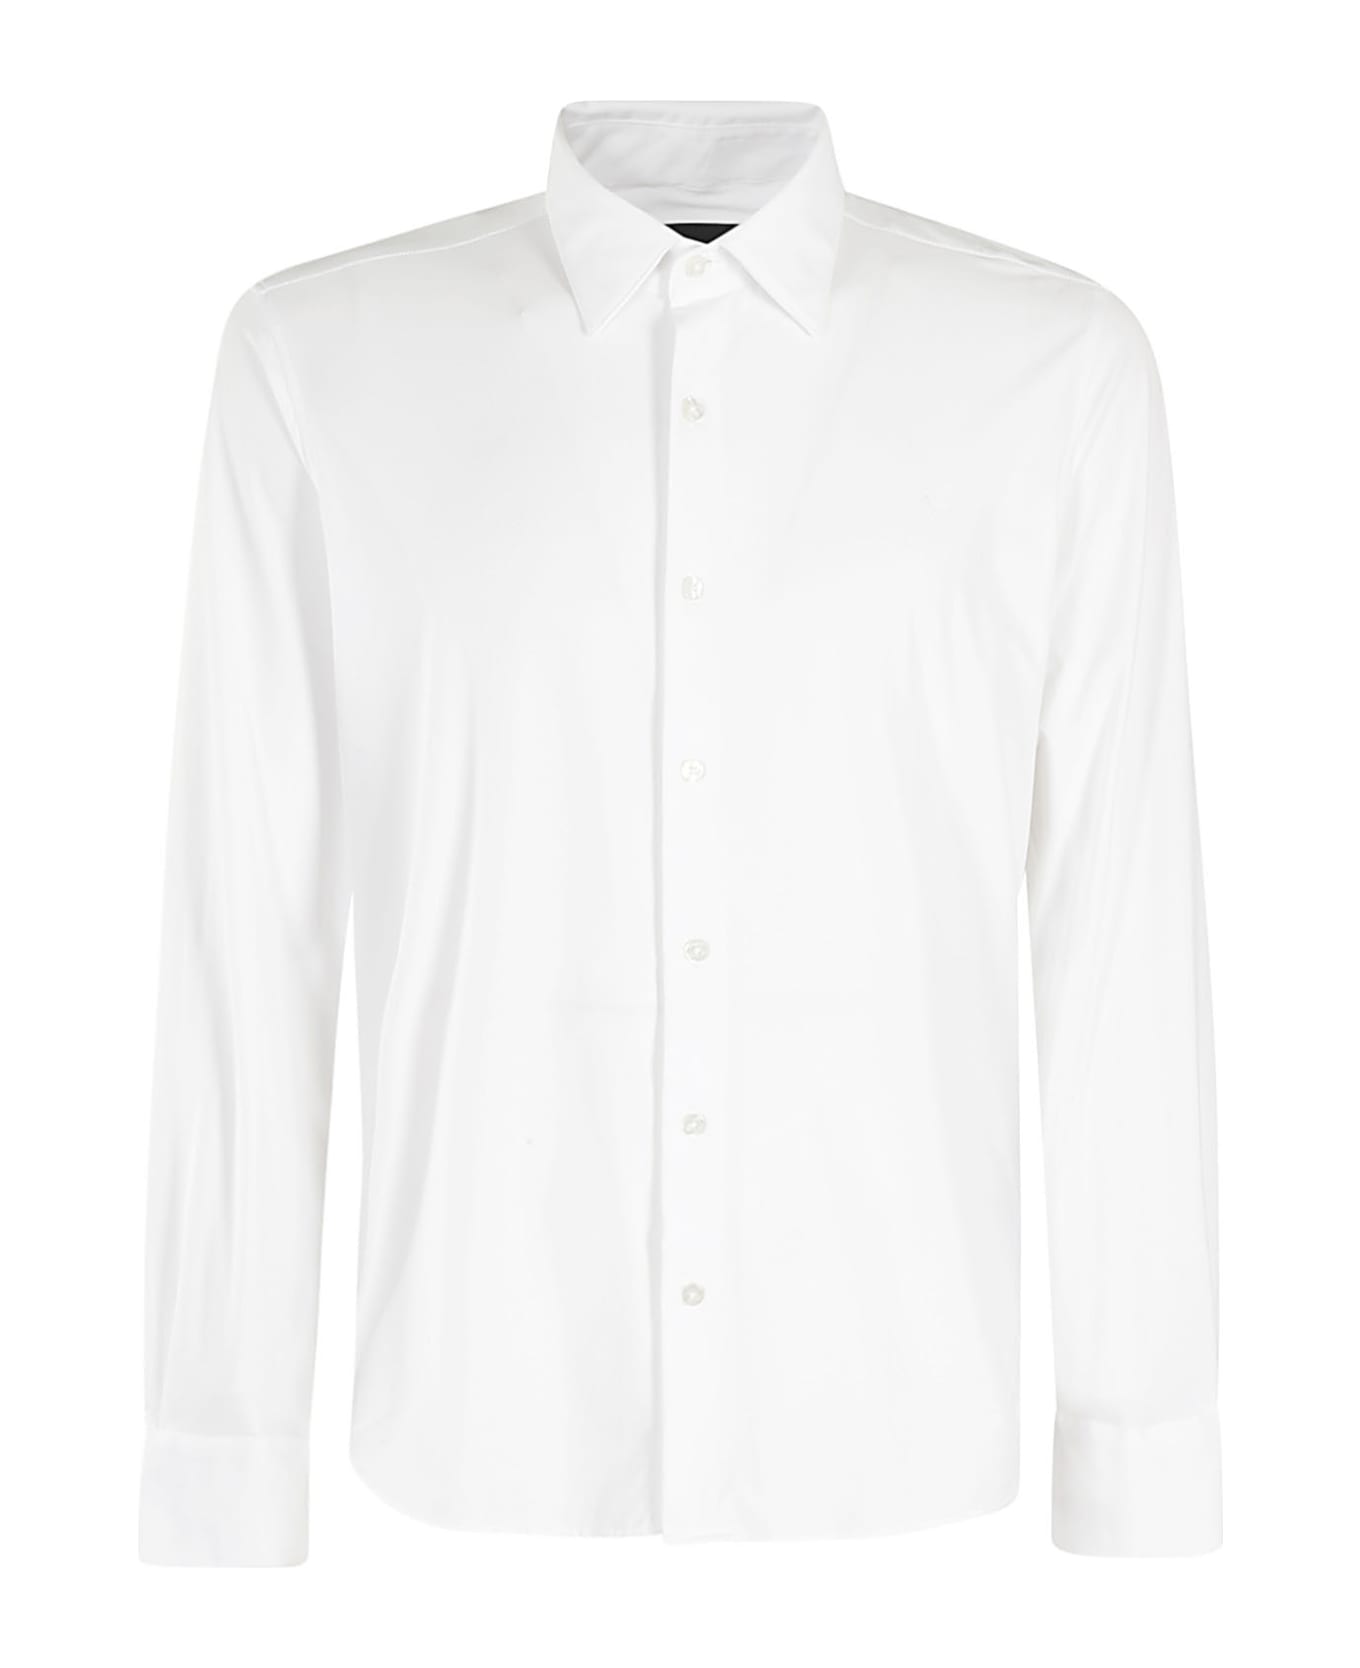 RRD - Roberto Ricci Design Oxford Shirt - Bianco シャツ